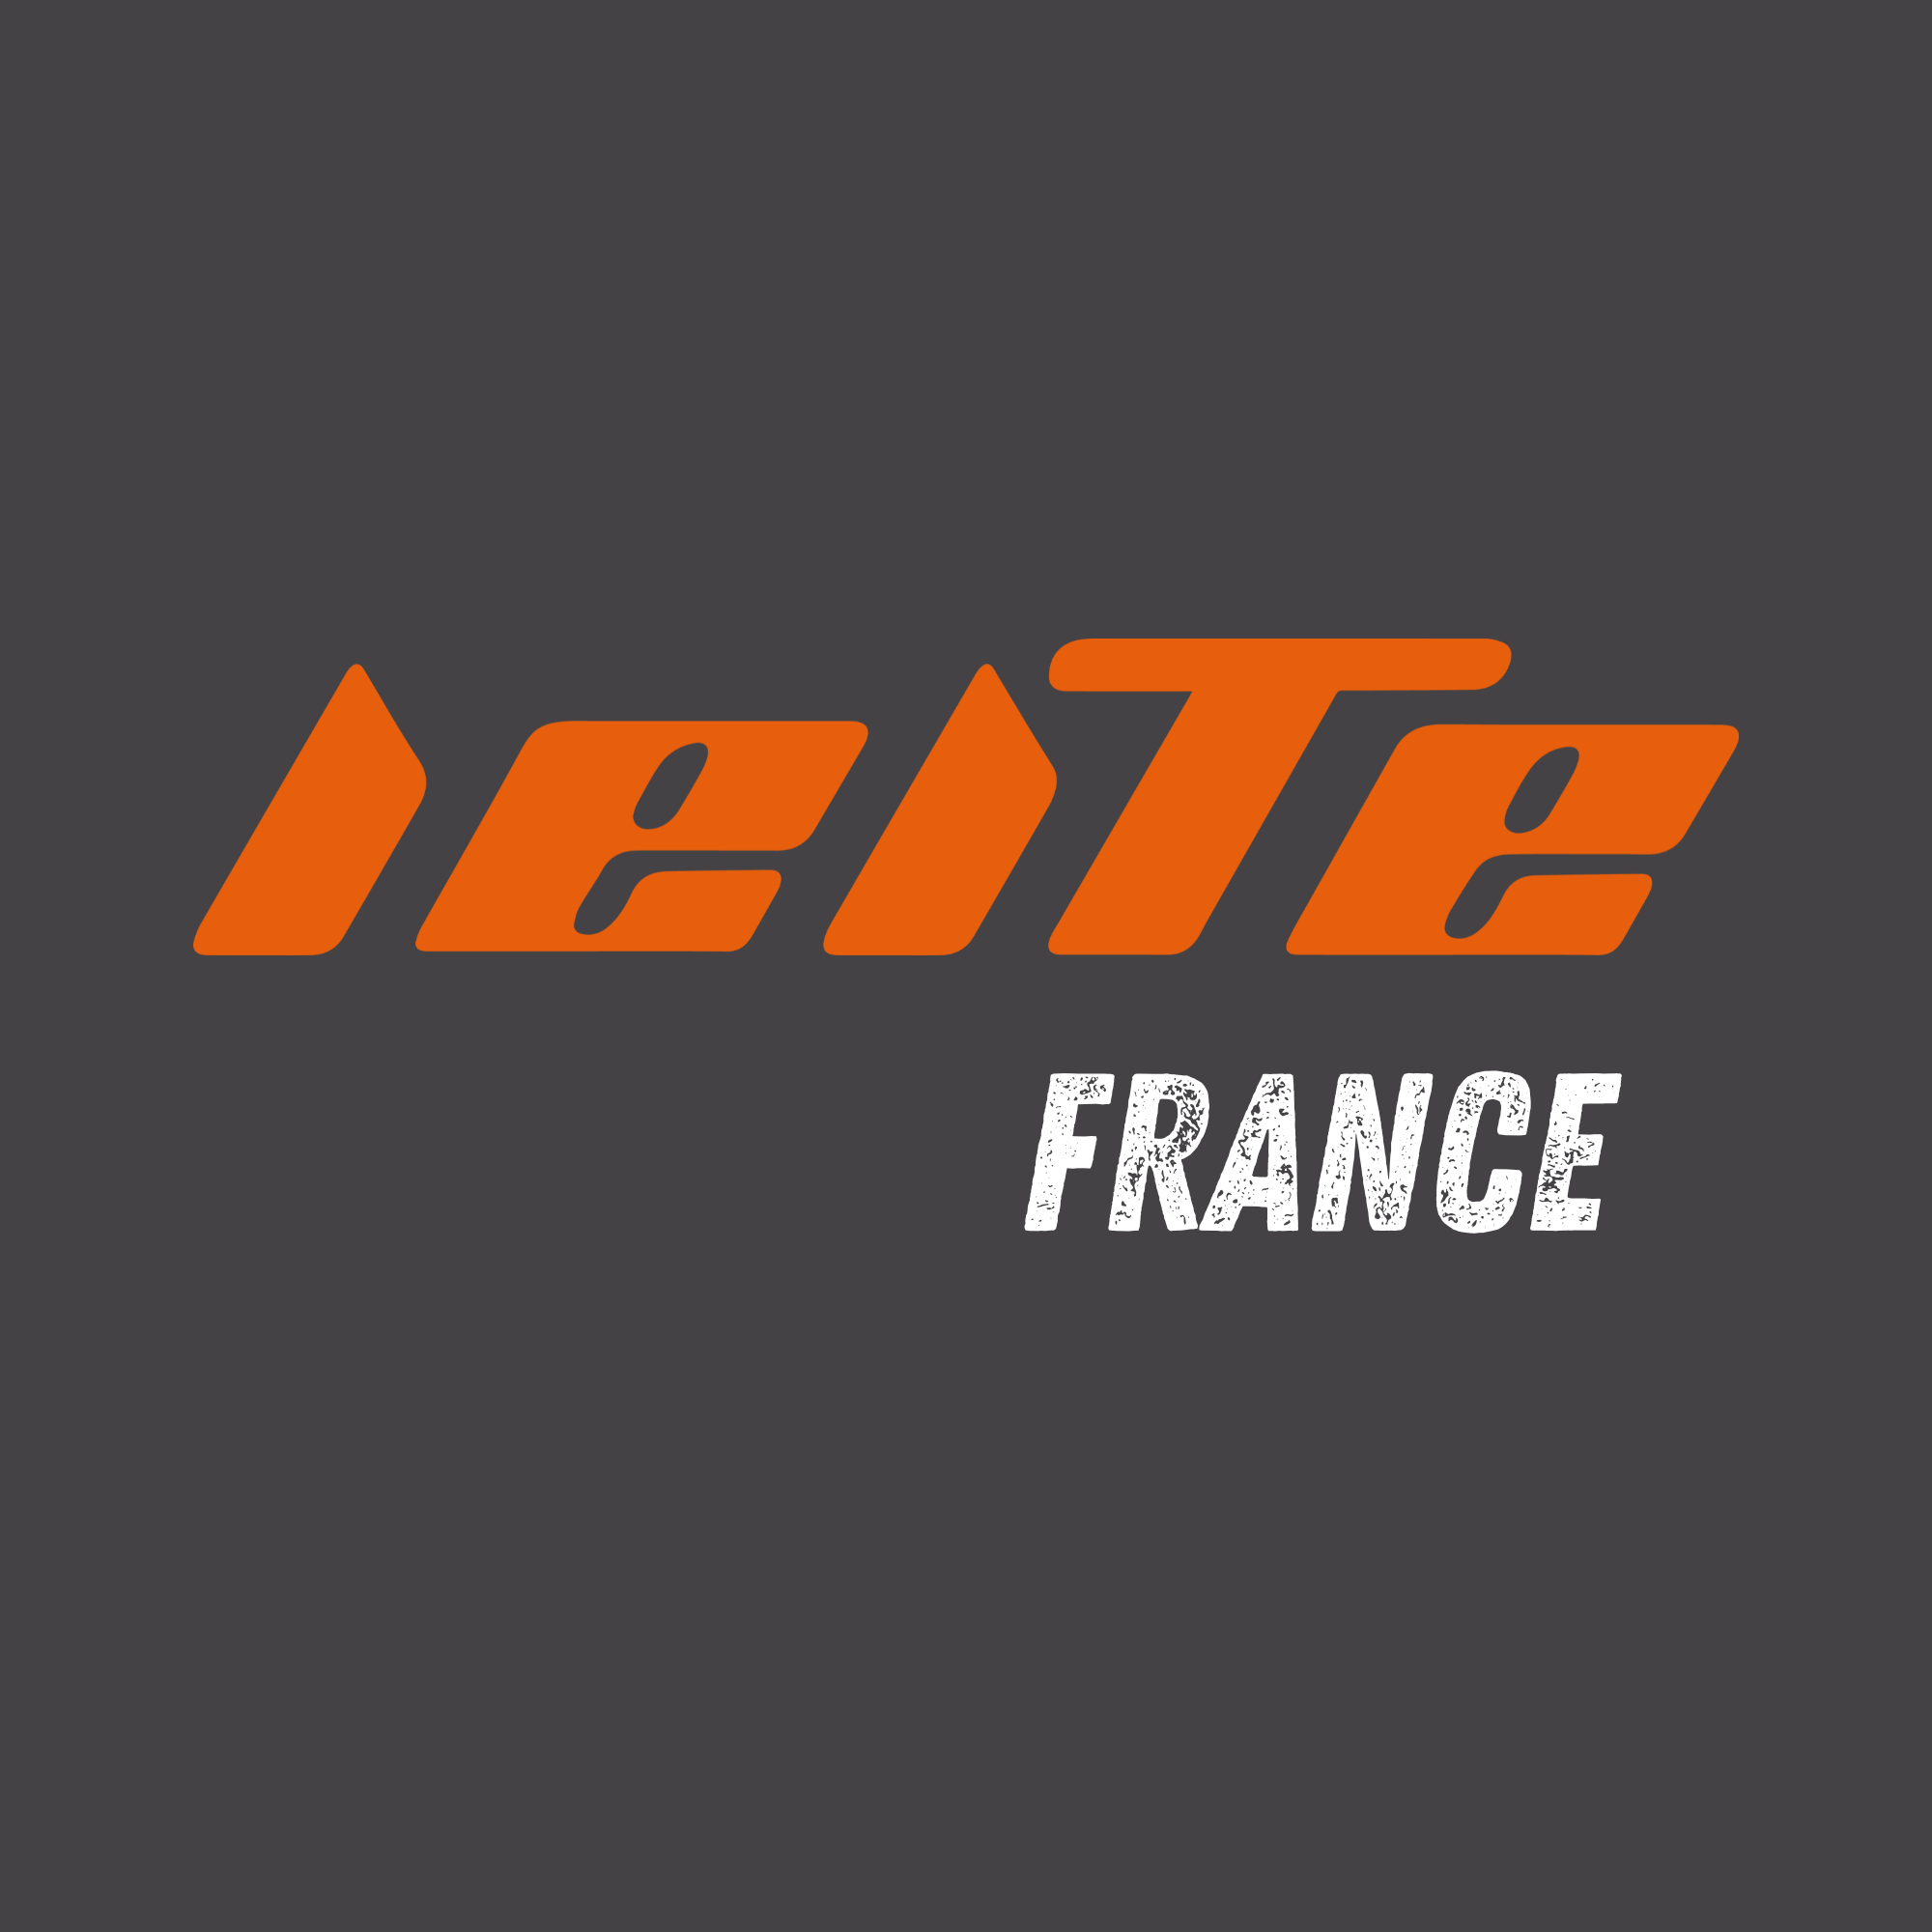 Leite France